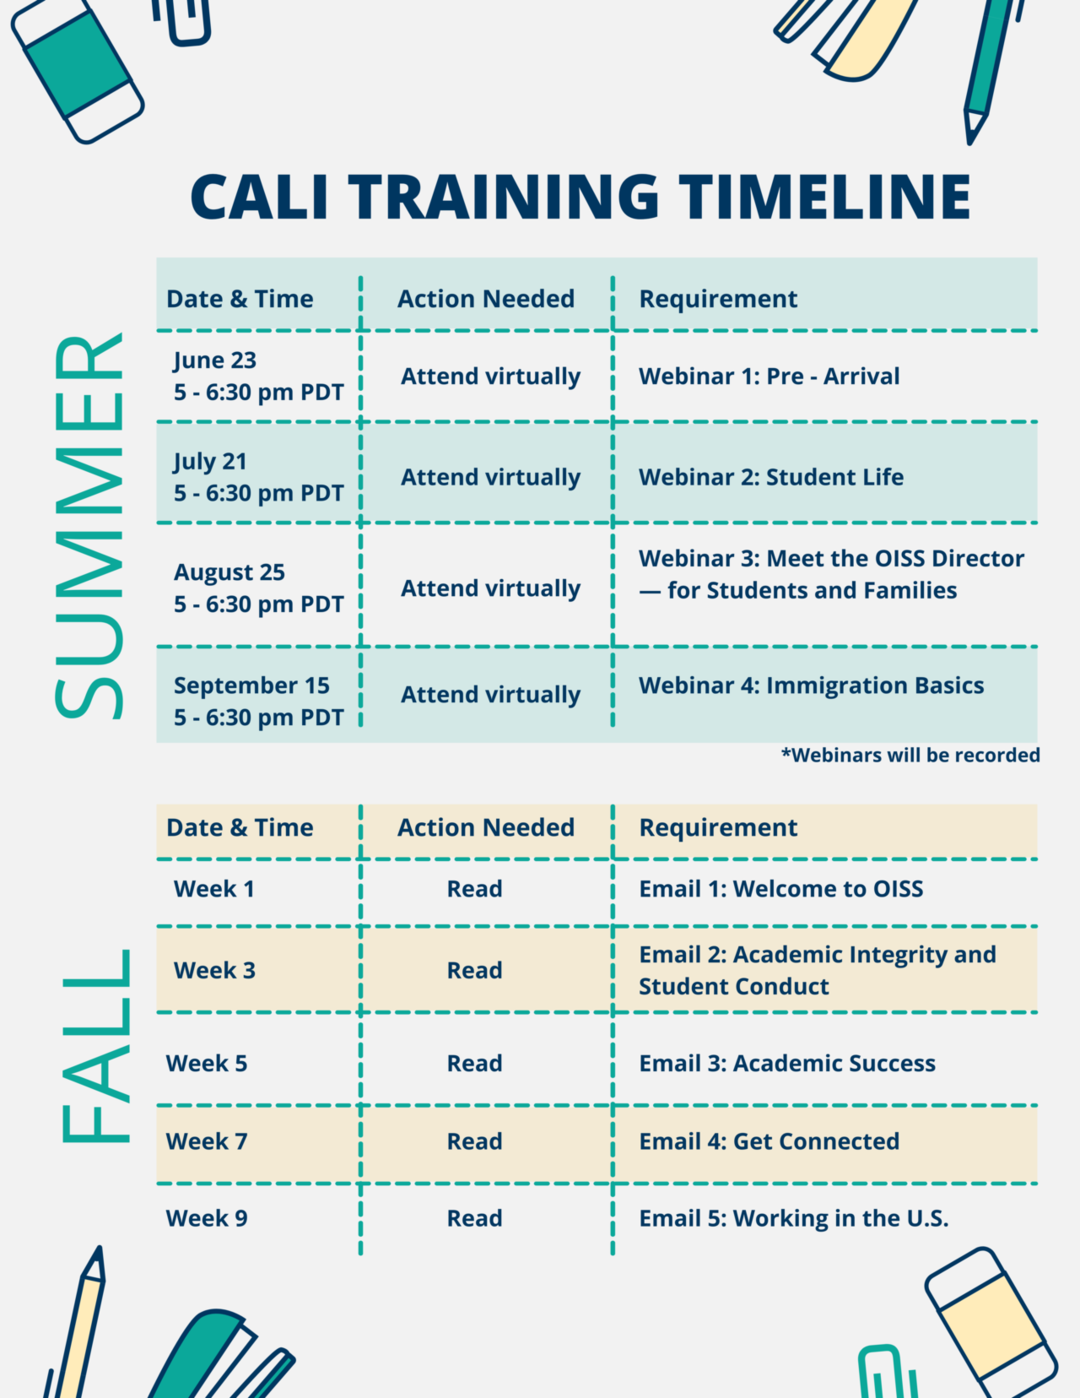 CALI Training Timeline